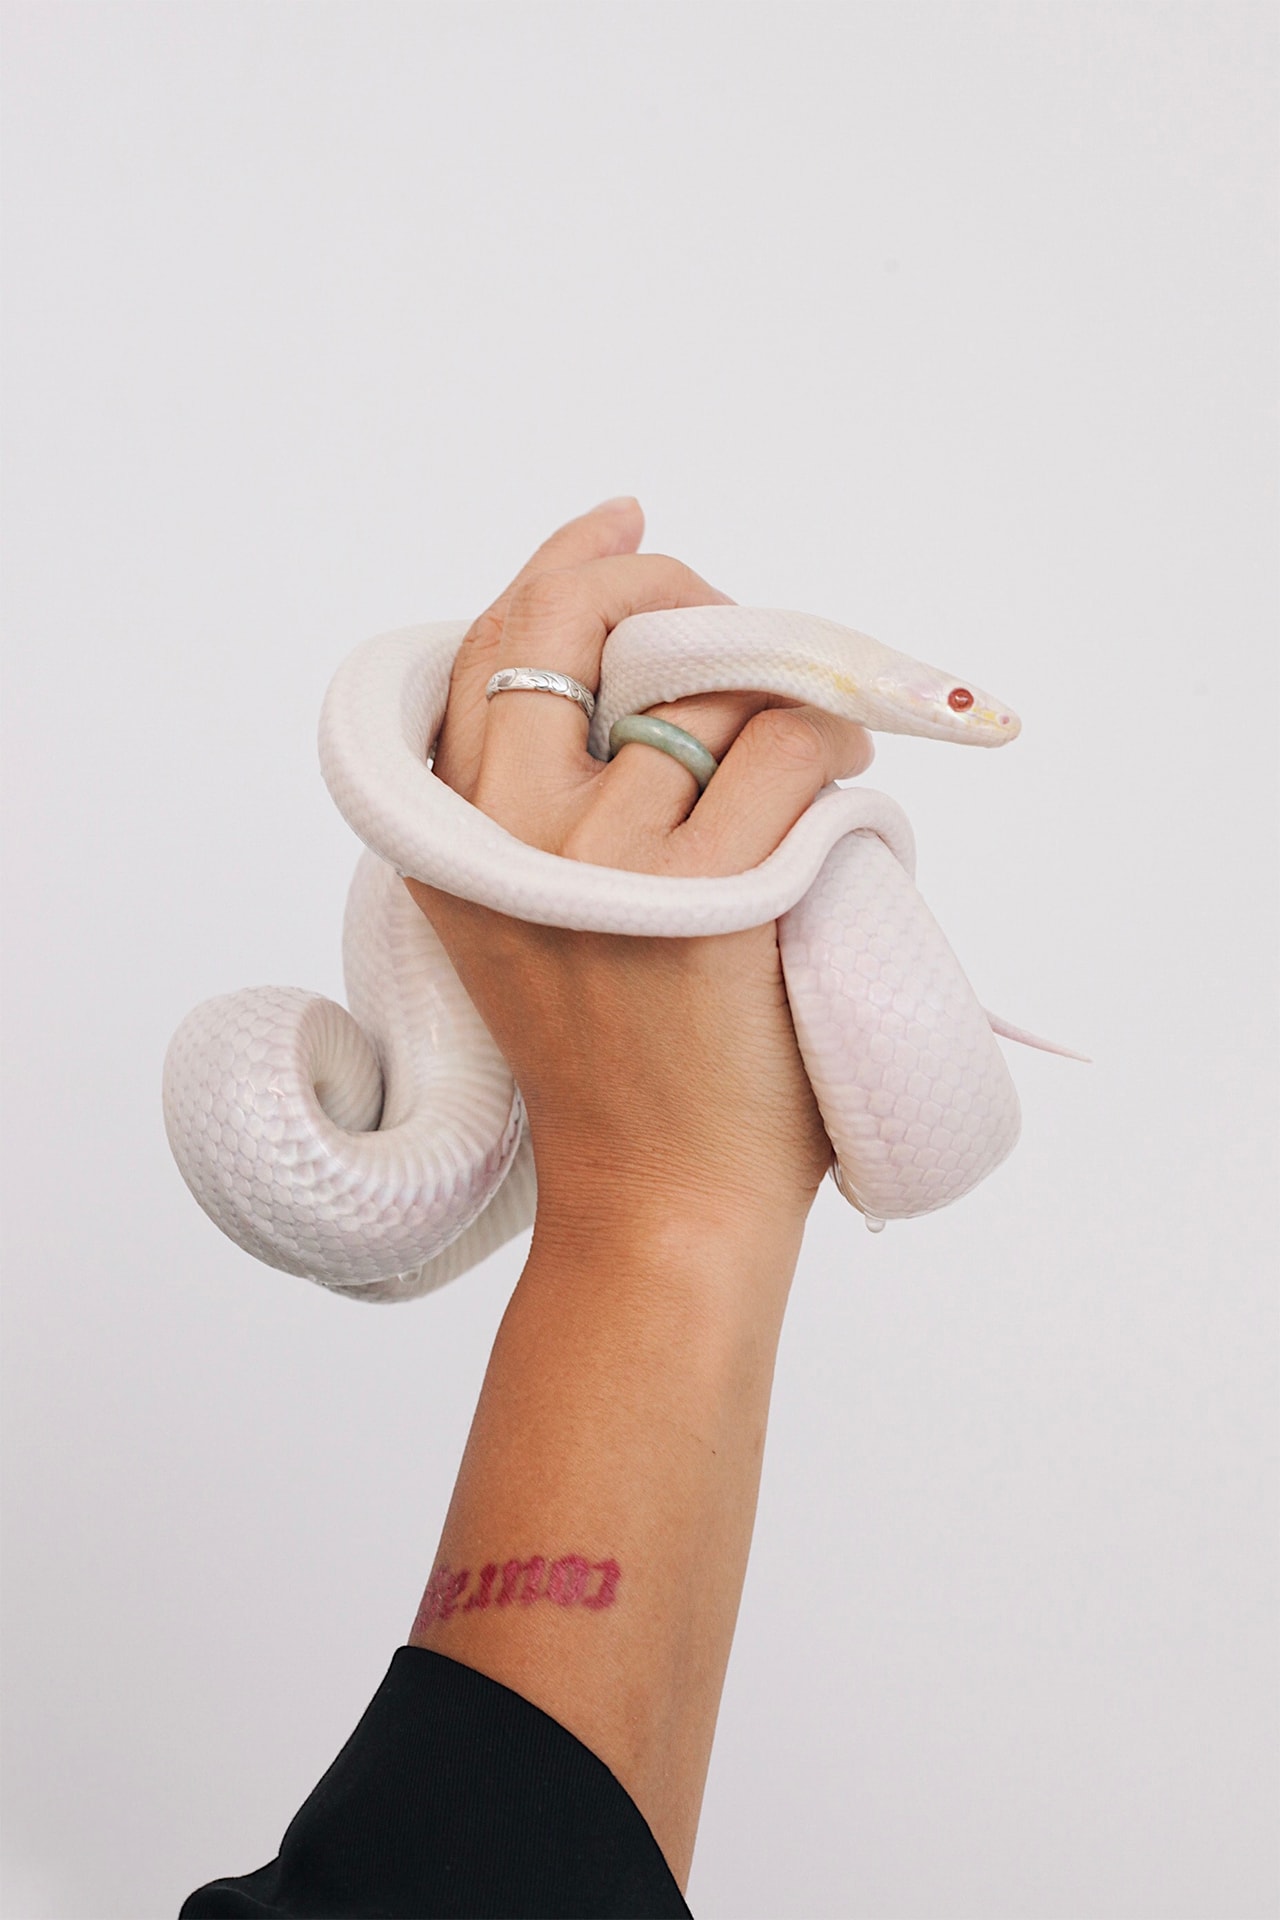 snake clitoris study science